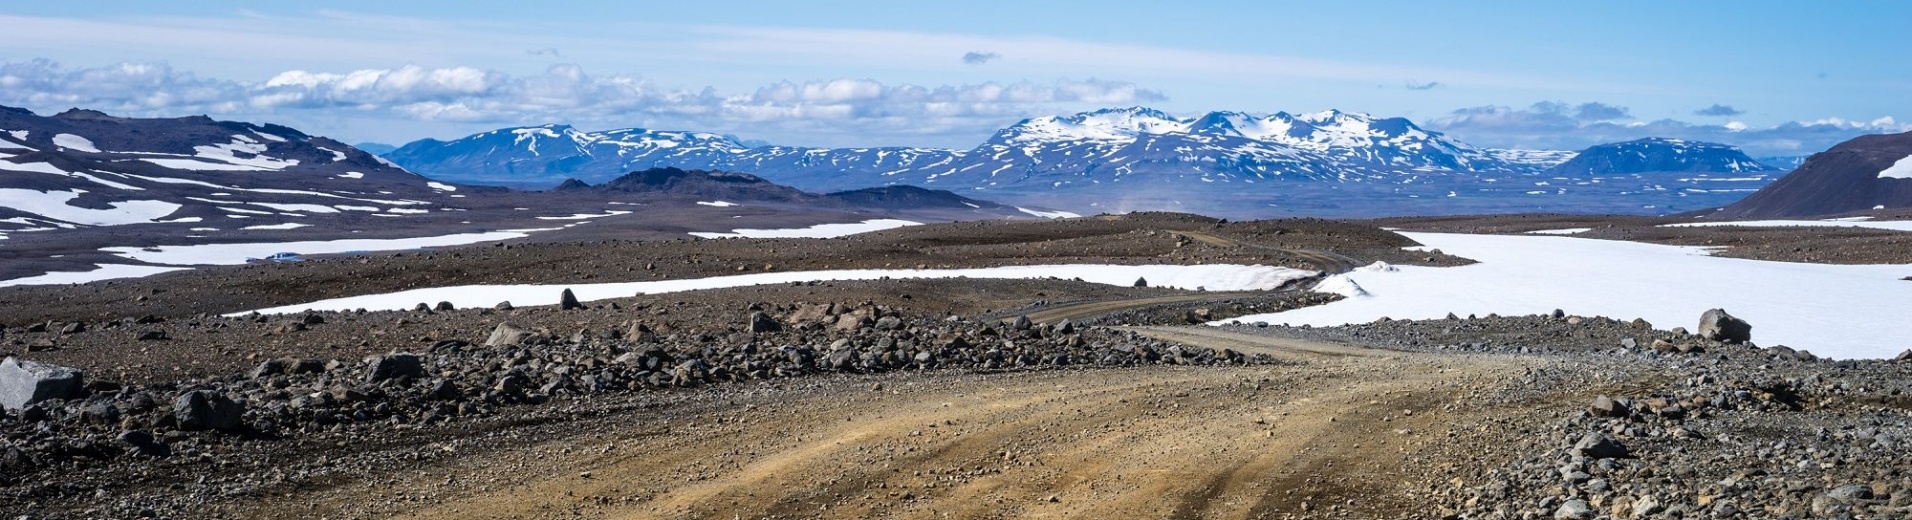 Route paysage Islande